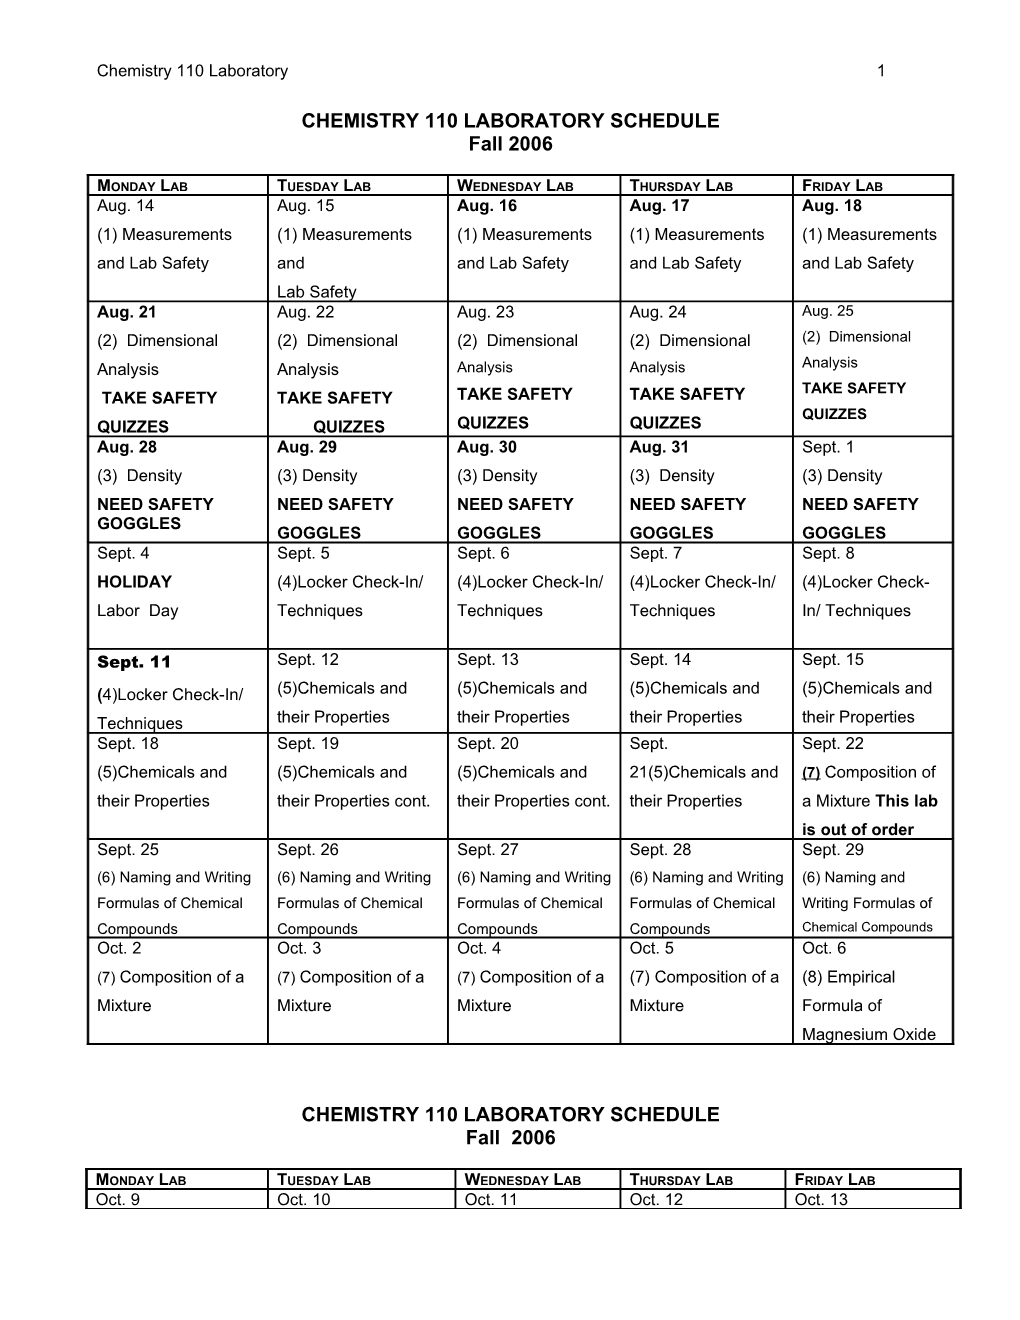 Chemistry 110 Laboratory Schedule